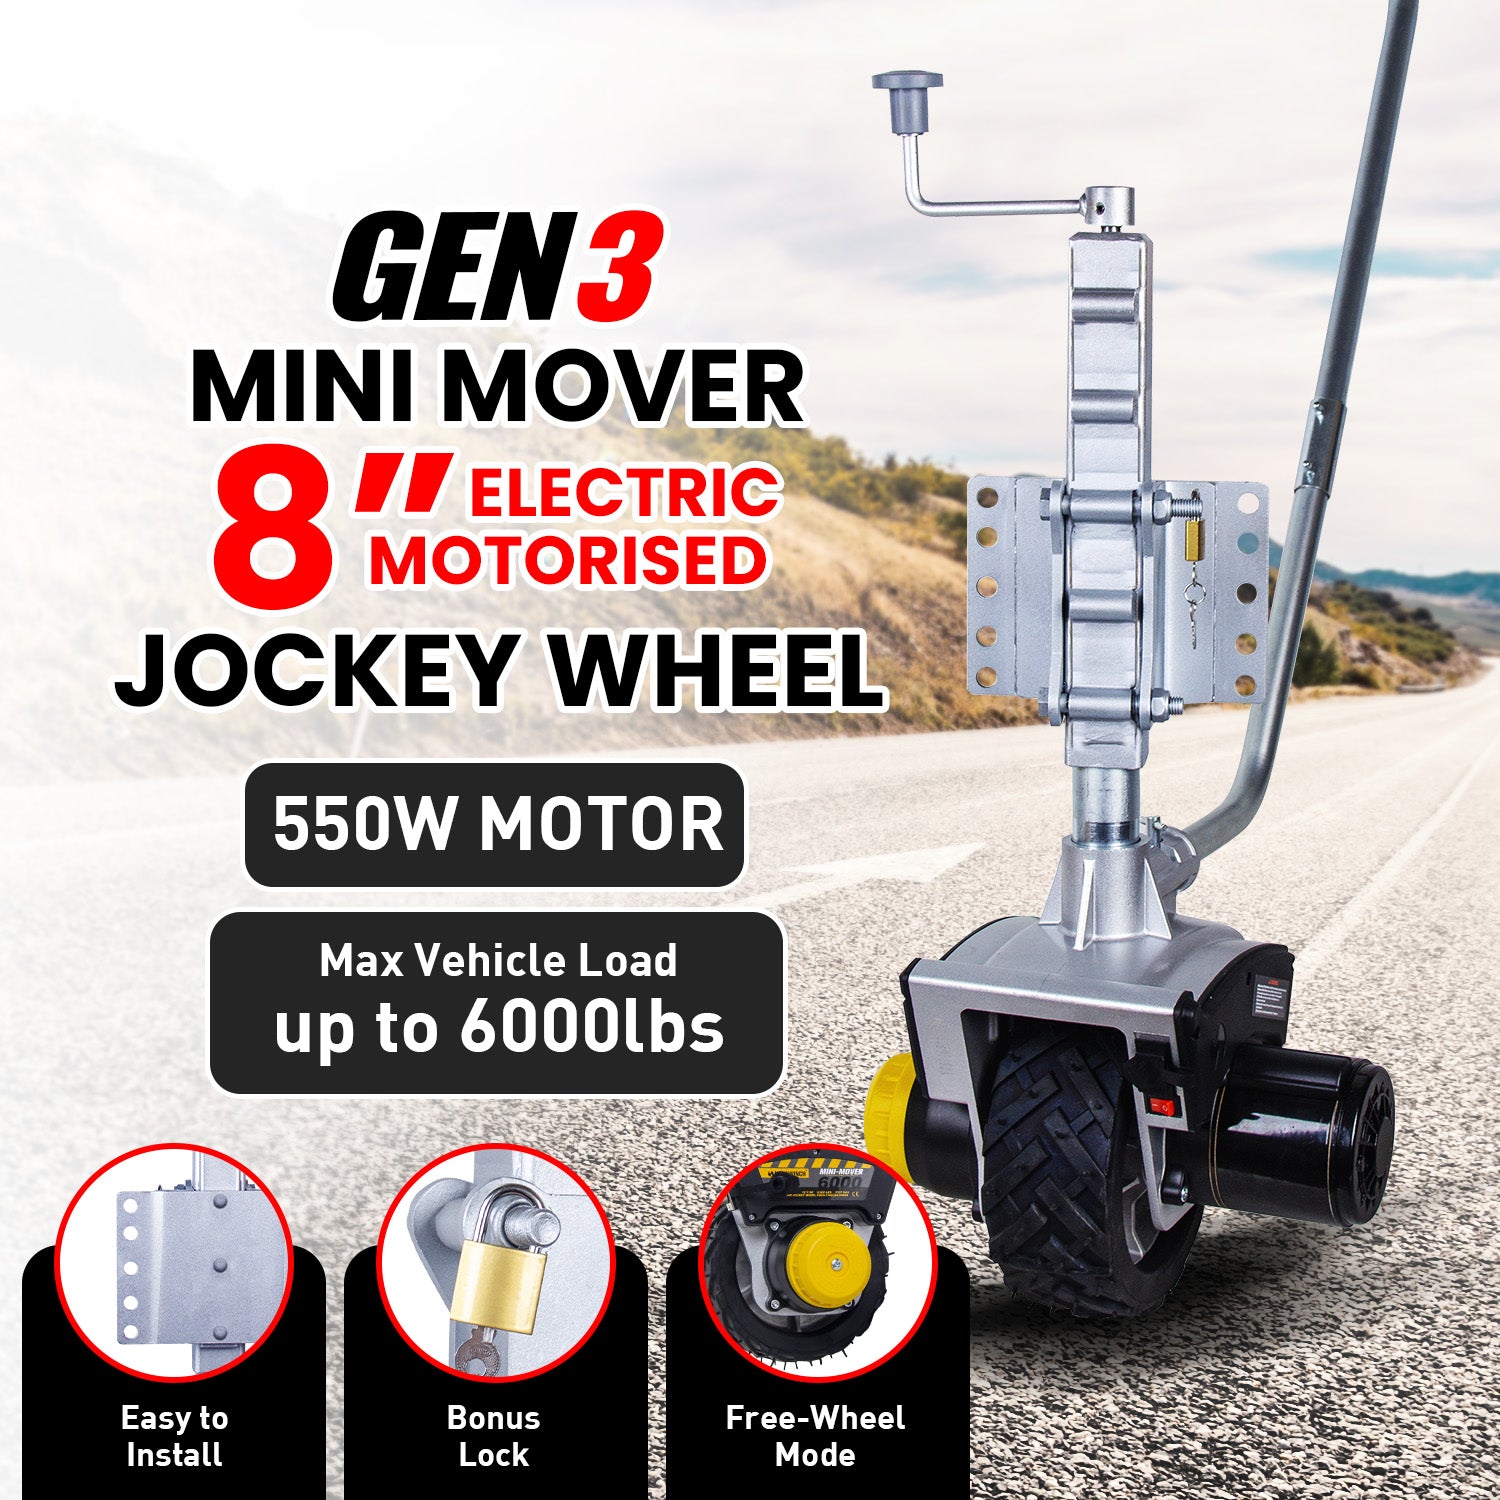 Mini Mover Gen3 Electric Motorised Jockey Wheel 12v 550w - SILBERSHELL